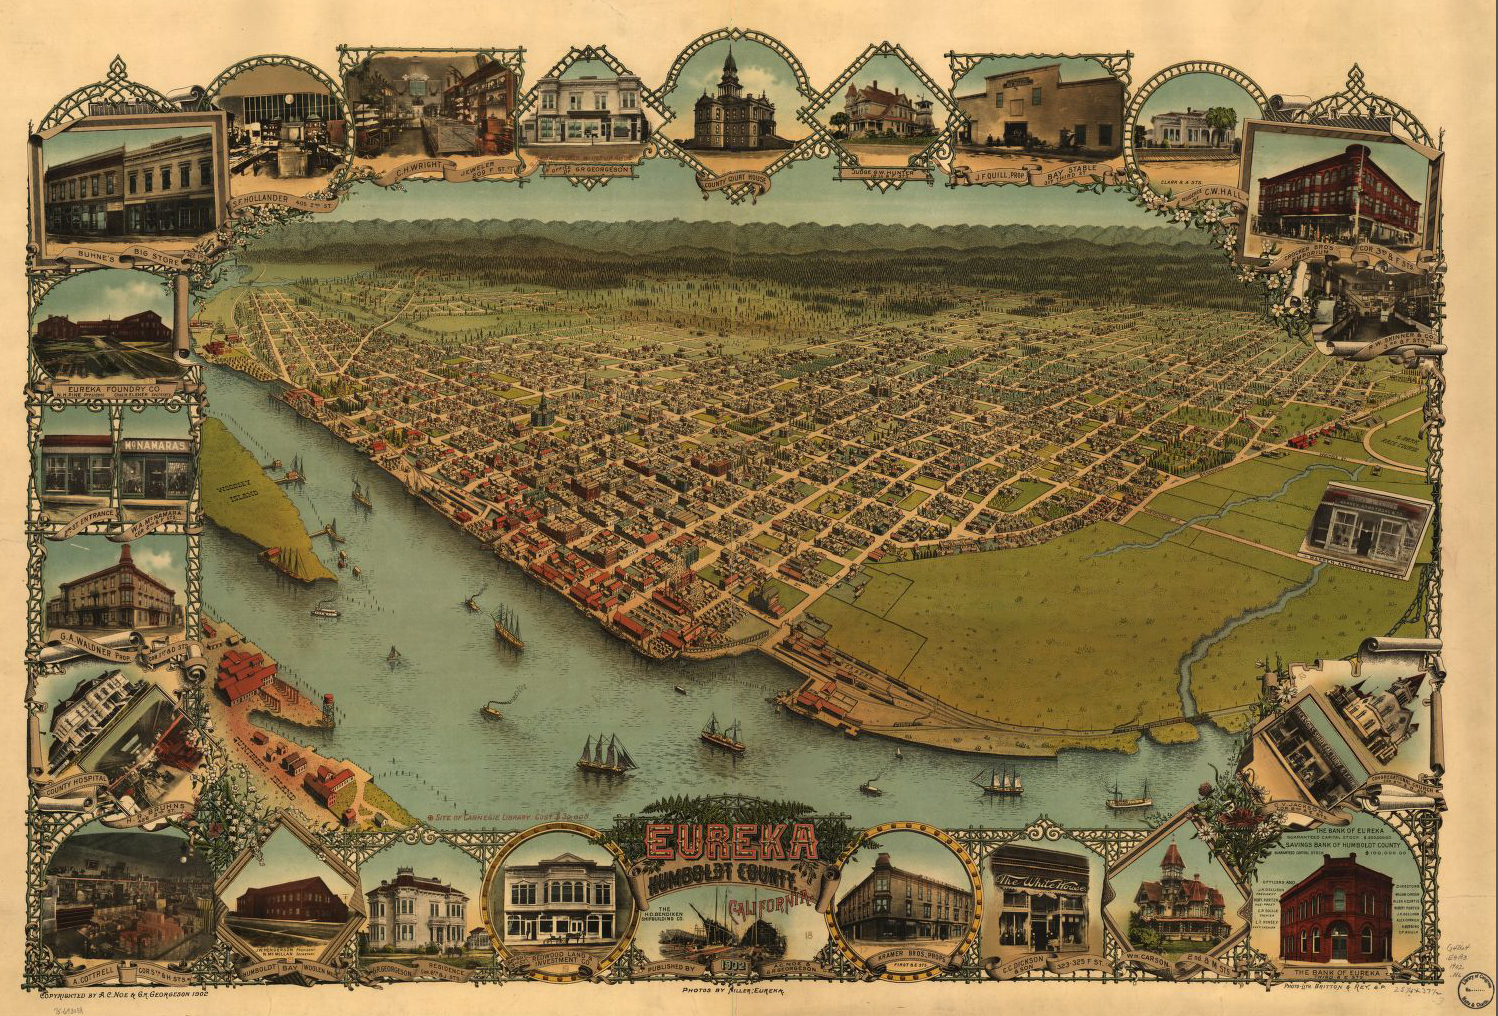 Eureka, California (1902).